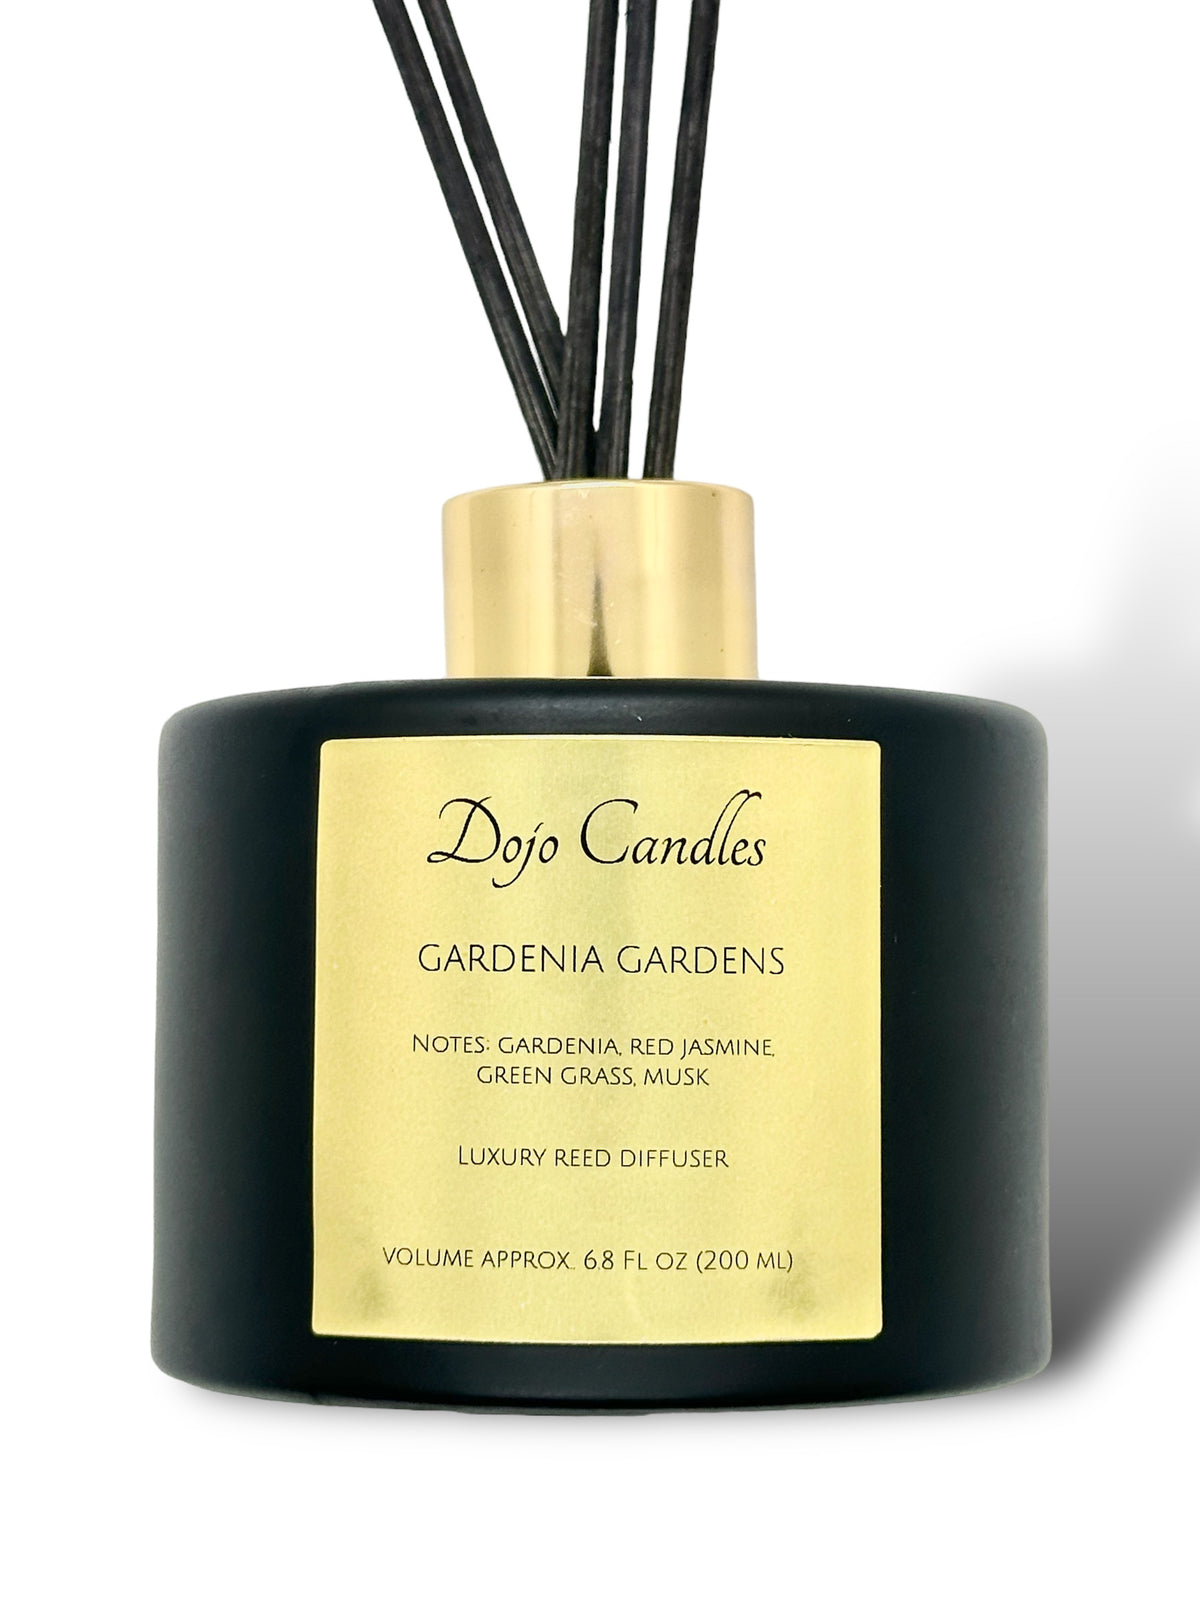 Gardenia Gardens Luxury Reed Diffuser